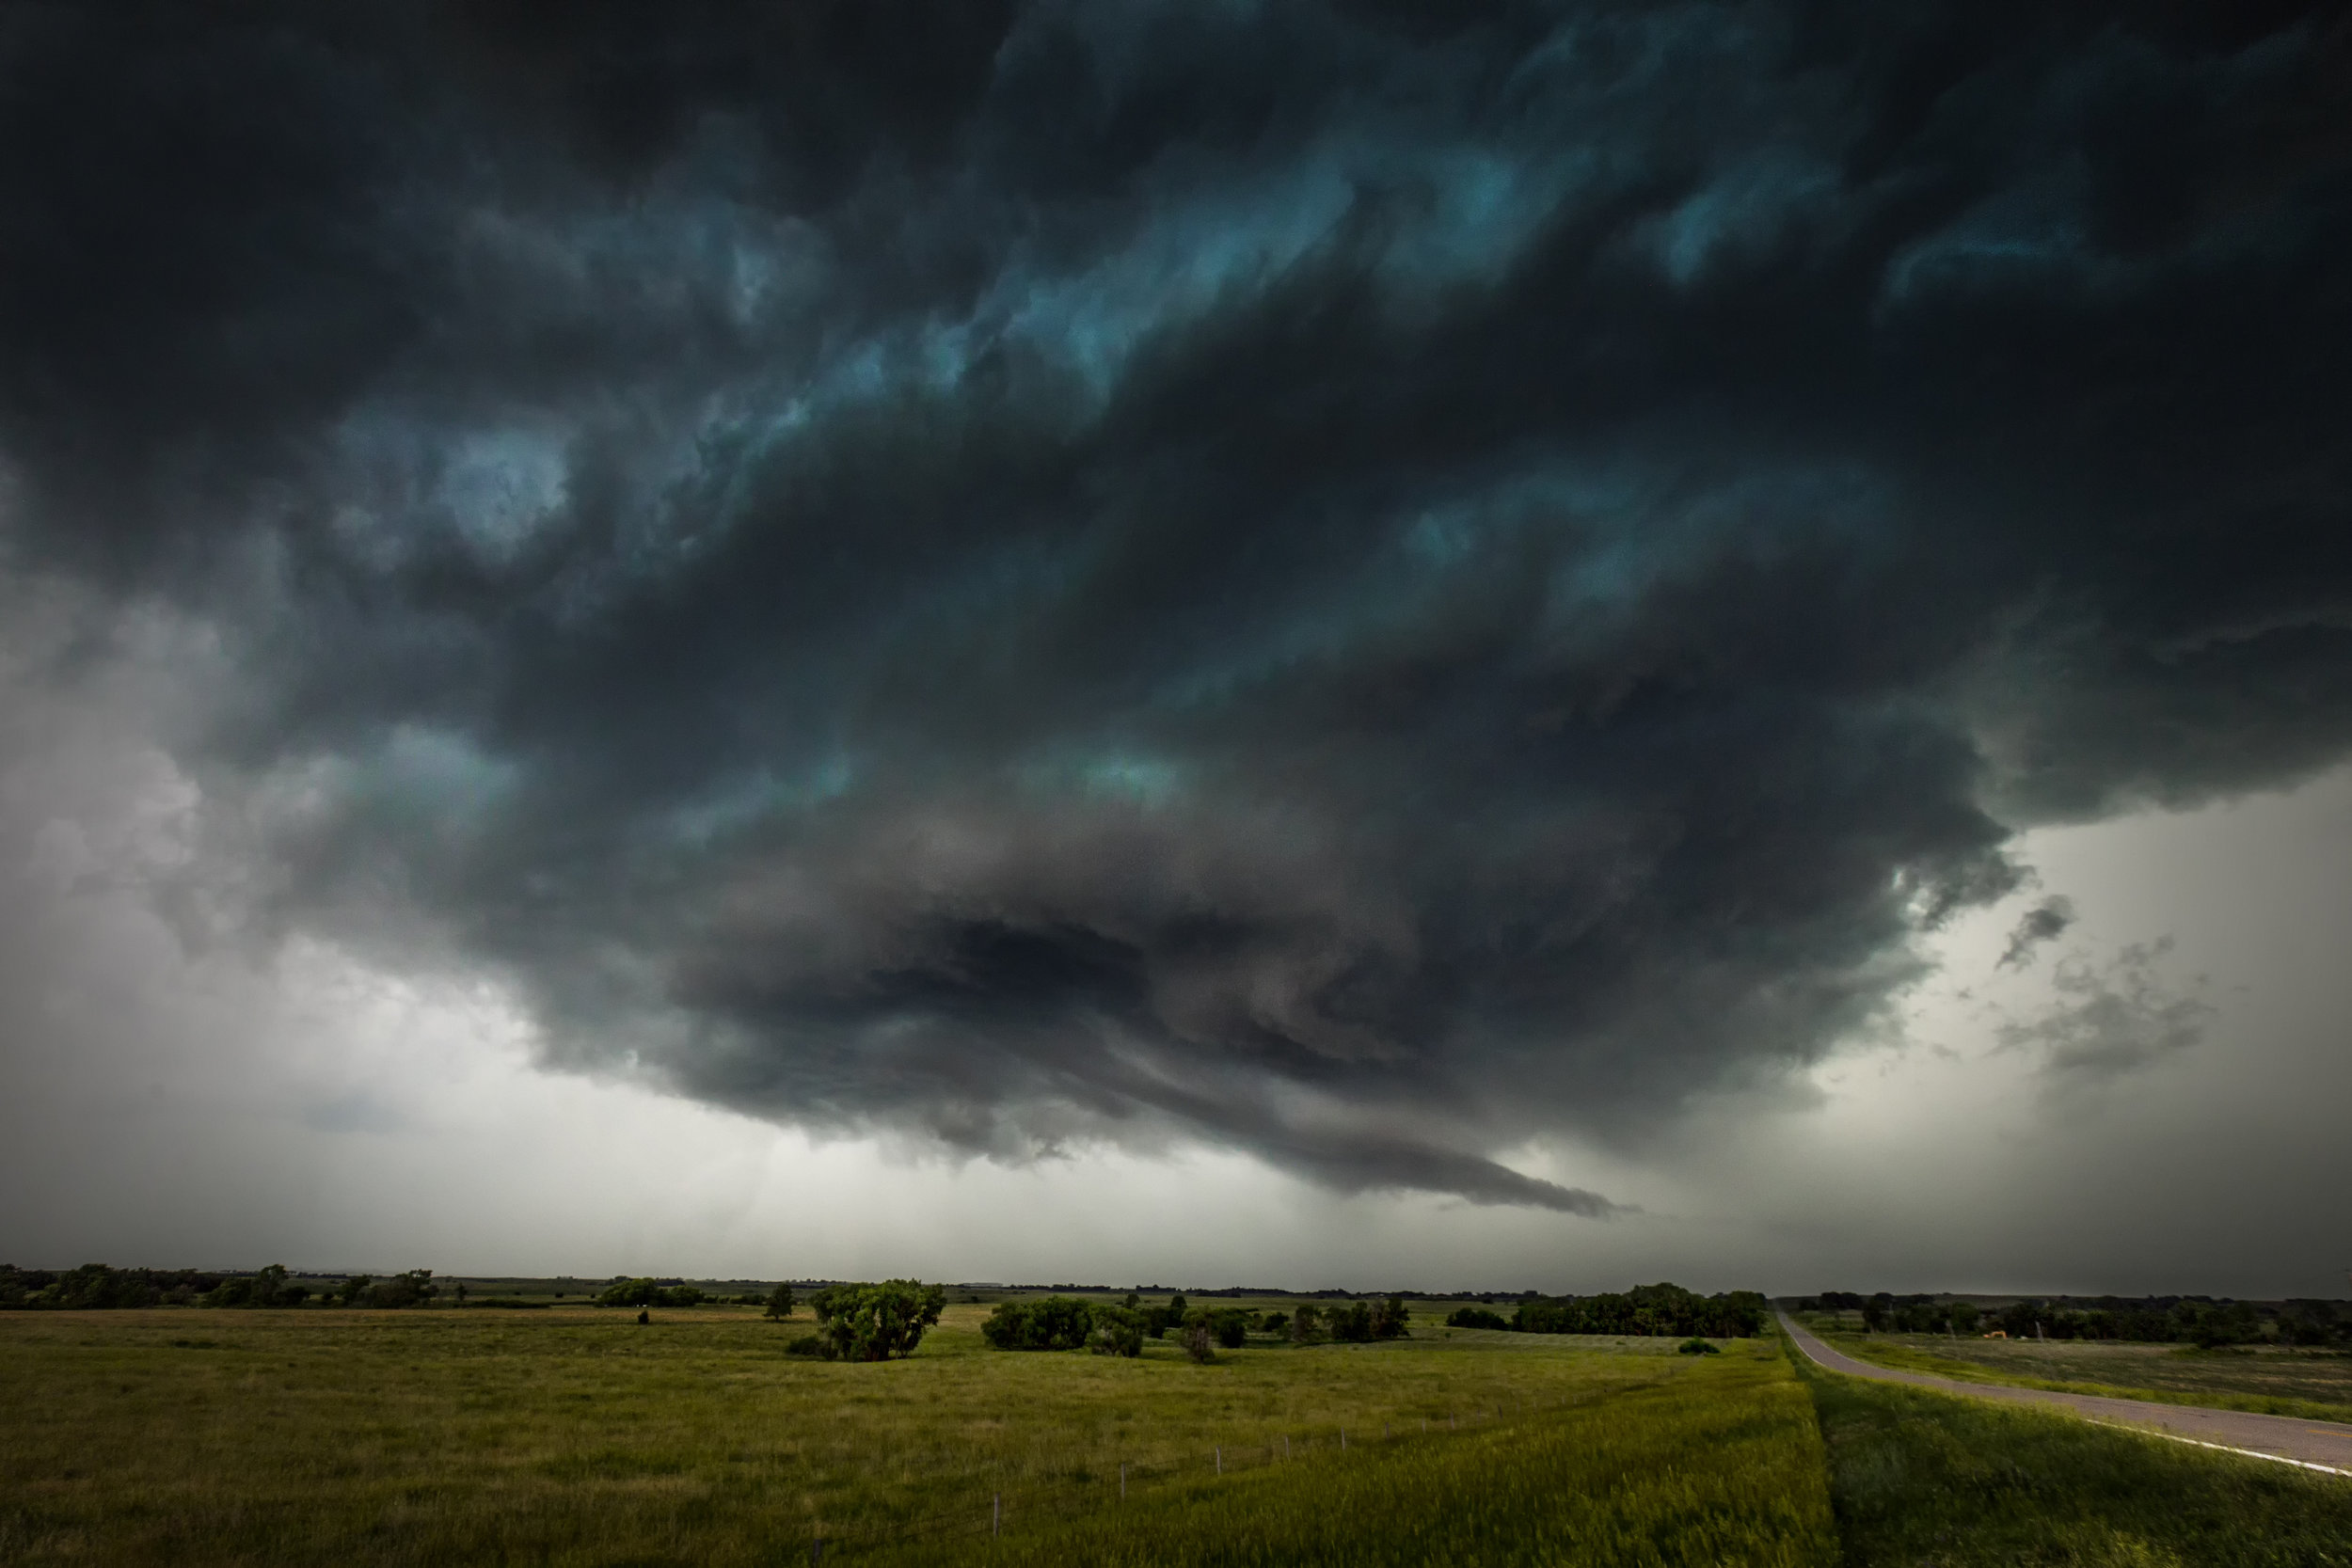 Wall Cloud - Naper, Nebraska June 13, 2017.jpg